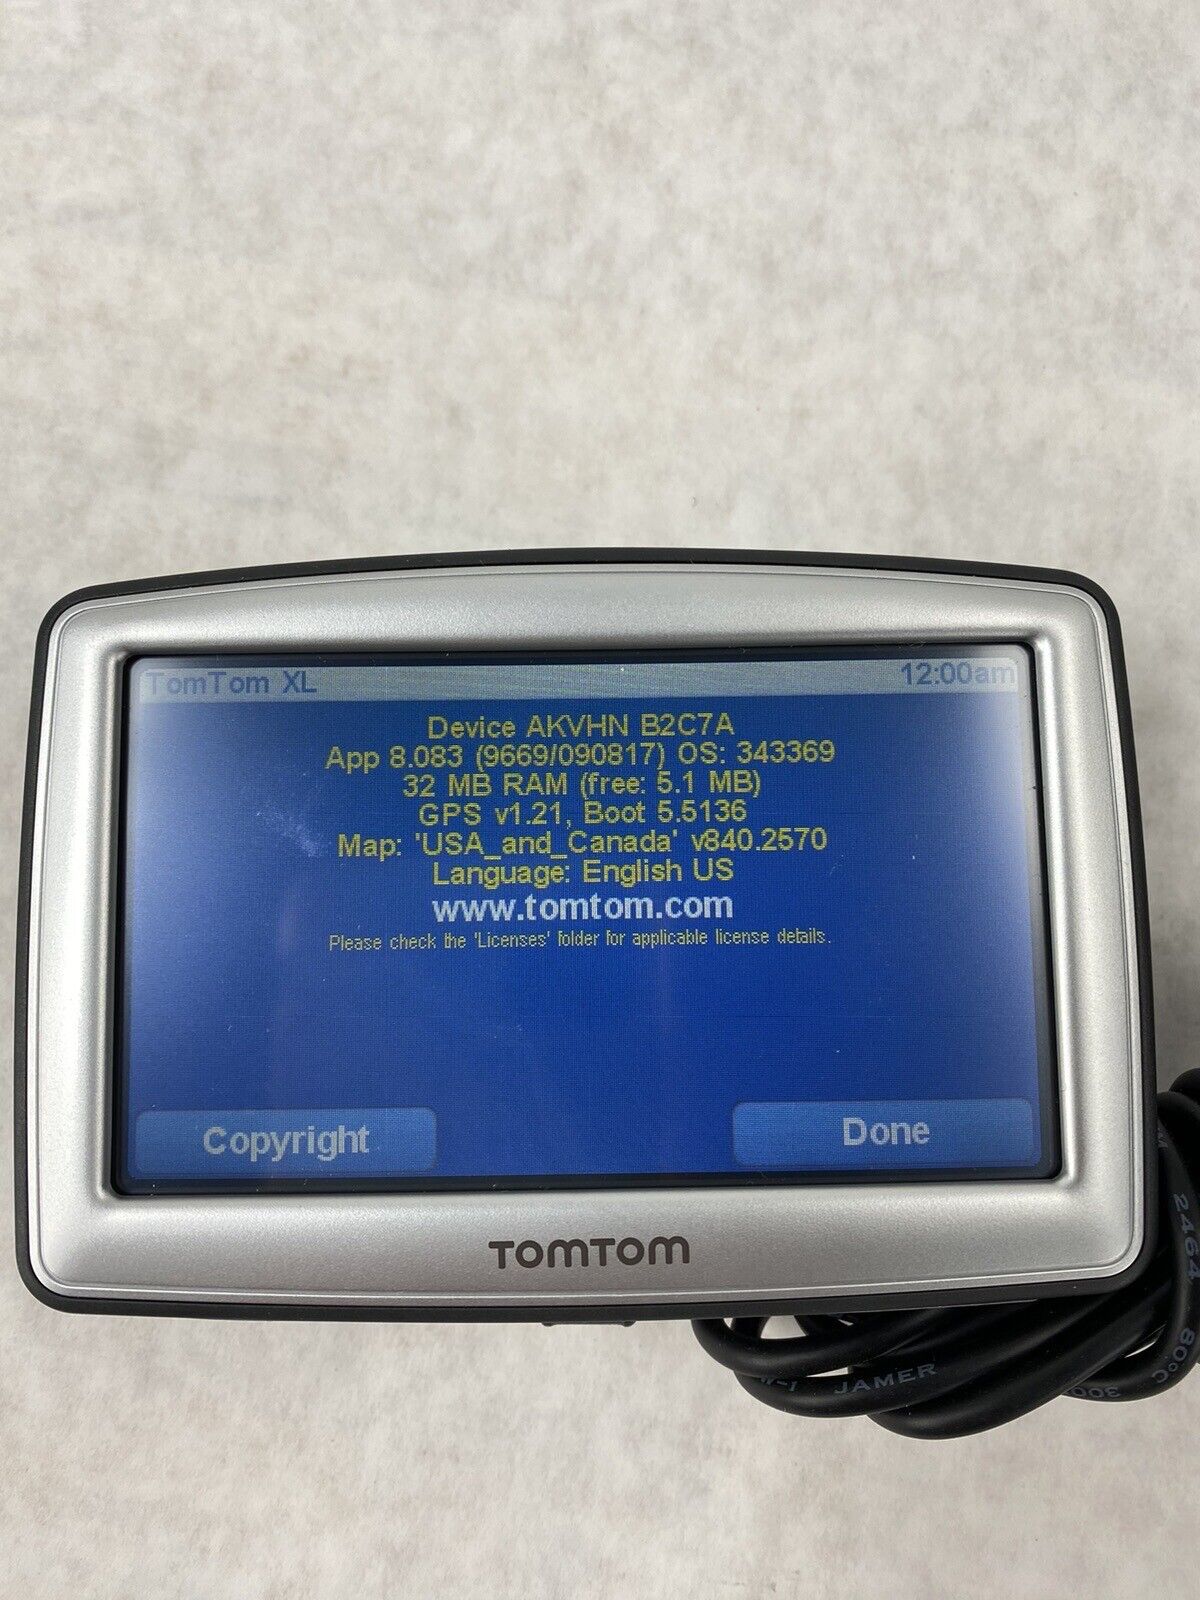 TomTom XL 330S GPS Navigator 4.3" LCD Touchscreen + Auto Power Adapter bundle